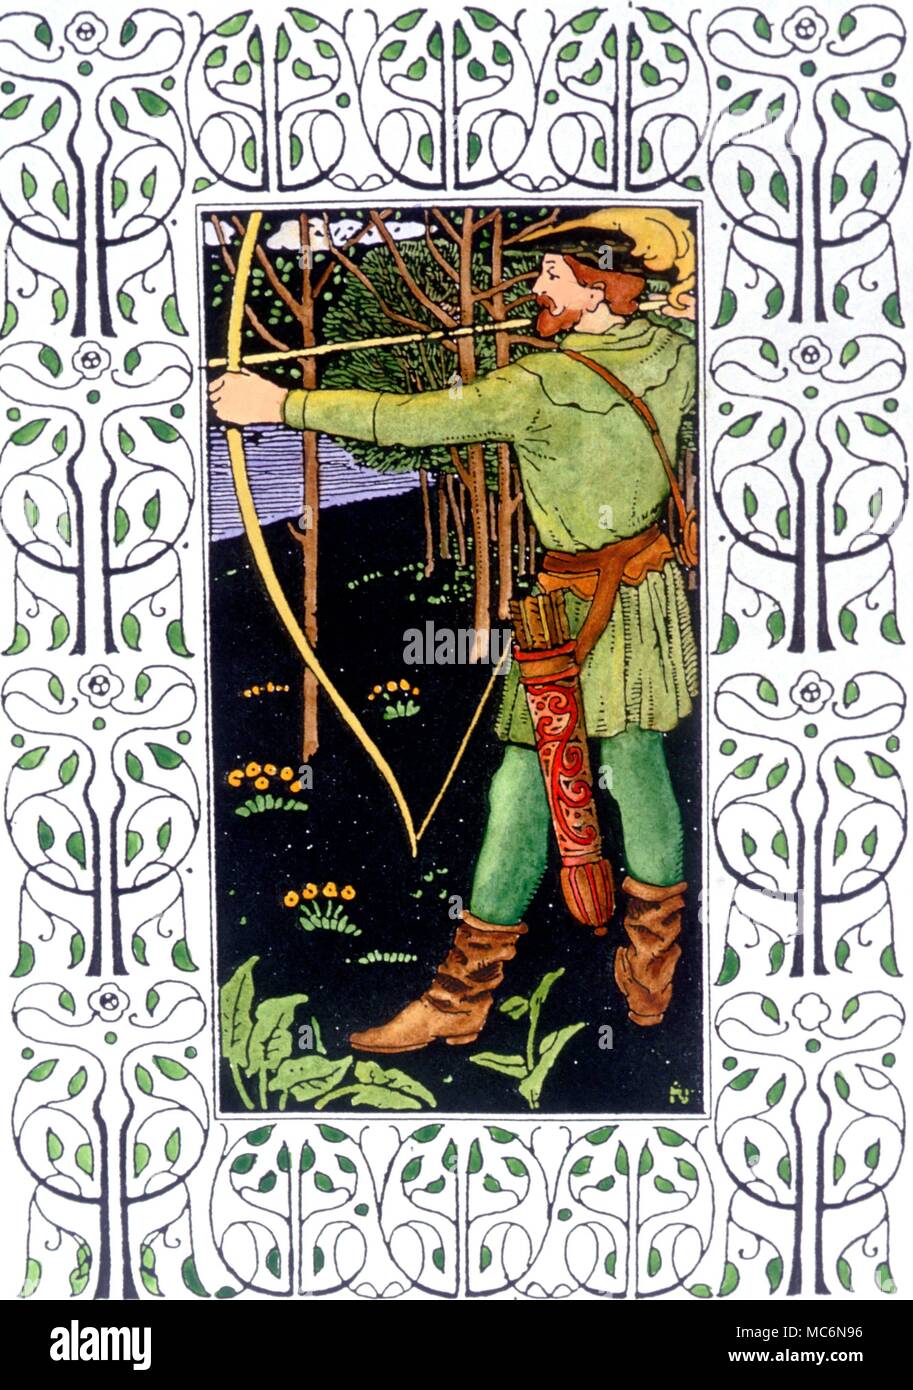 https://c8.alamy.com/comp/MC6N96/robin-hood-portrayal-of-robin-hood-in-lincoln-green-illustration-of-circa-1905-MC6N96.jpg